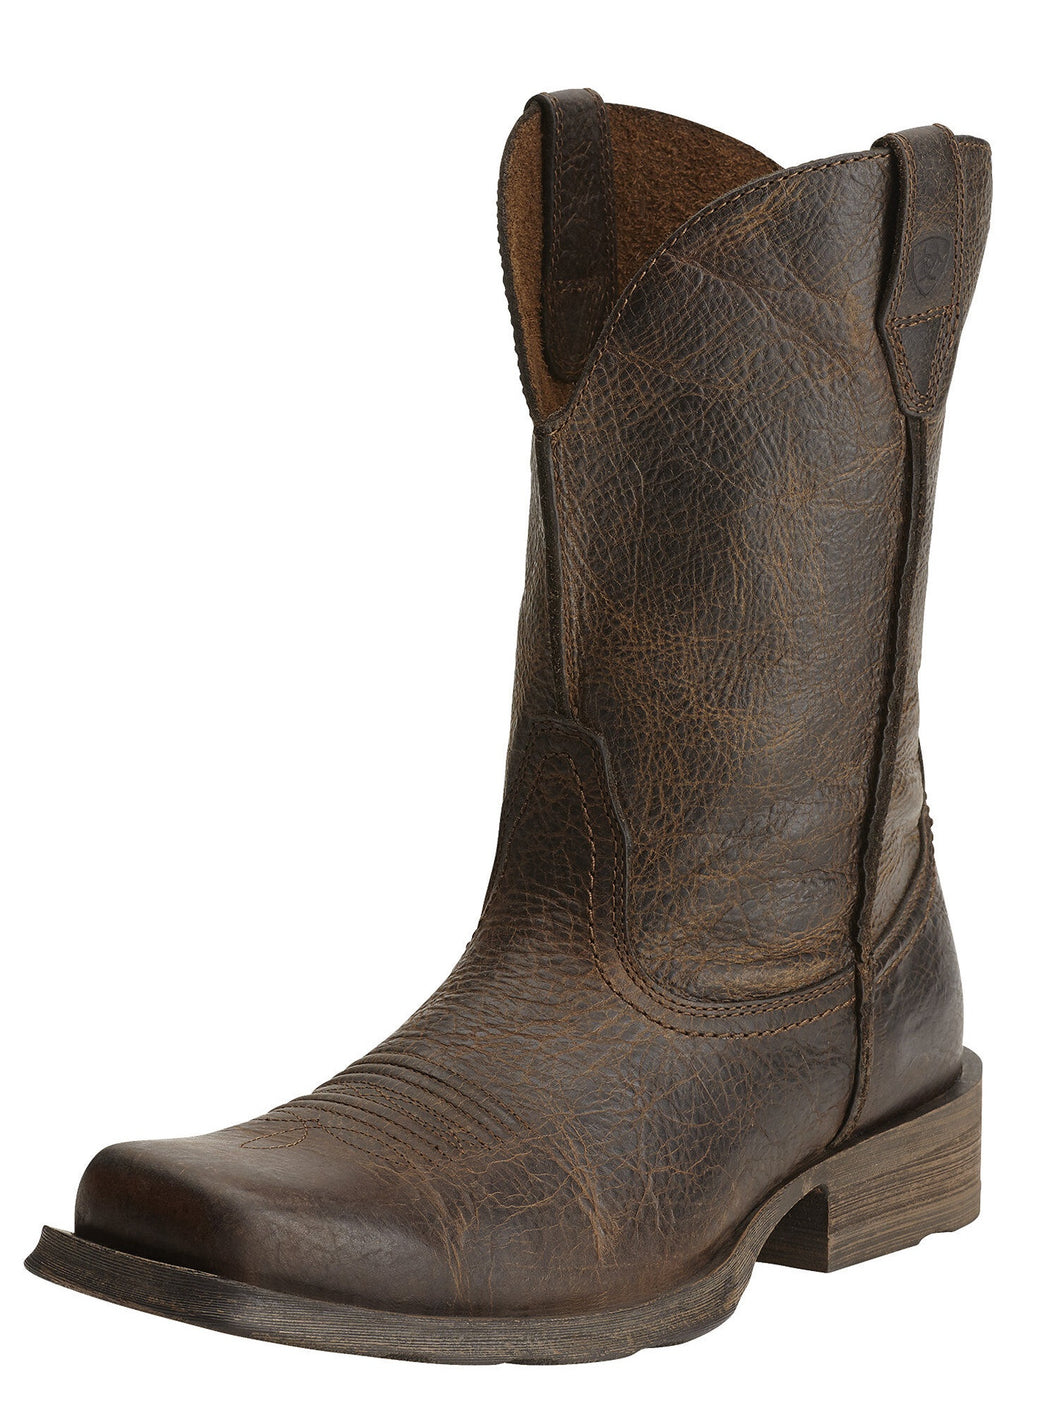 ARIAT Boots - Mens Rambler Western Cowboy - Wicker